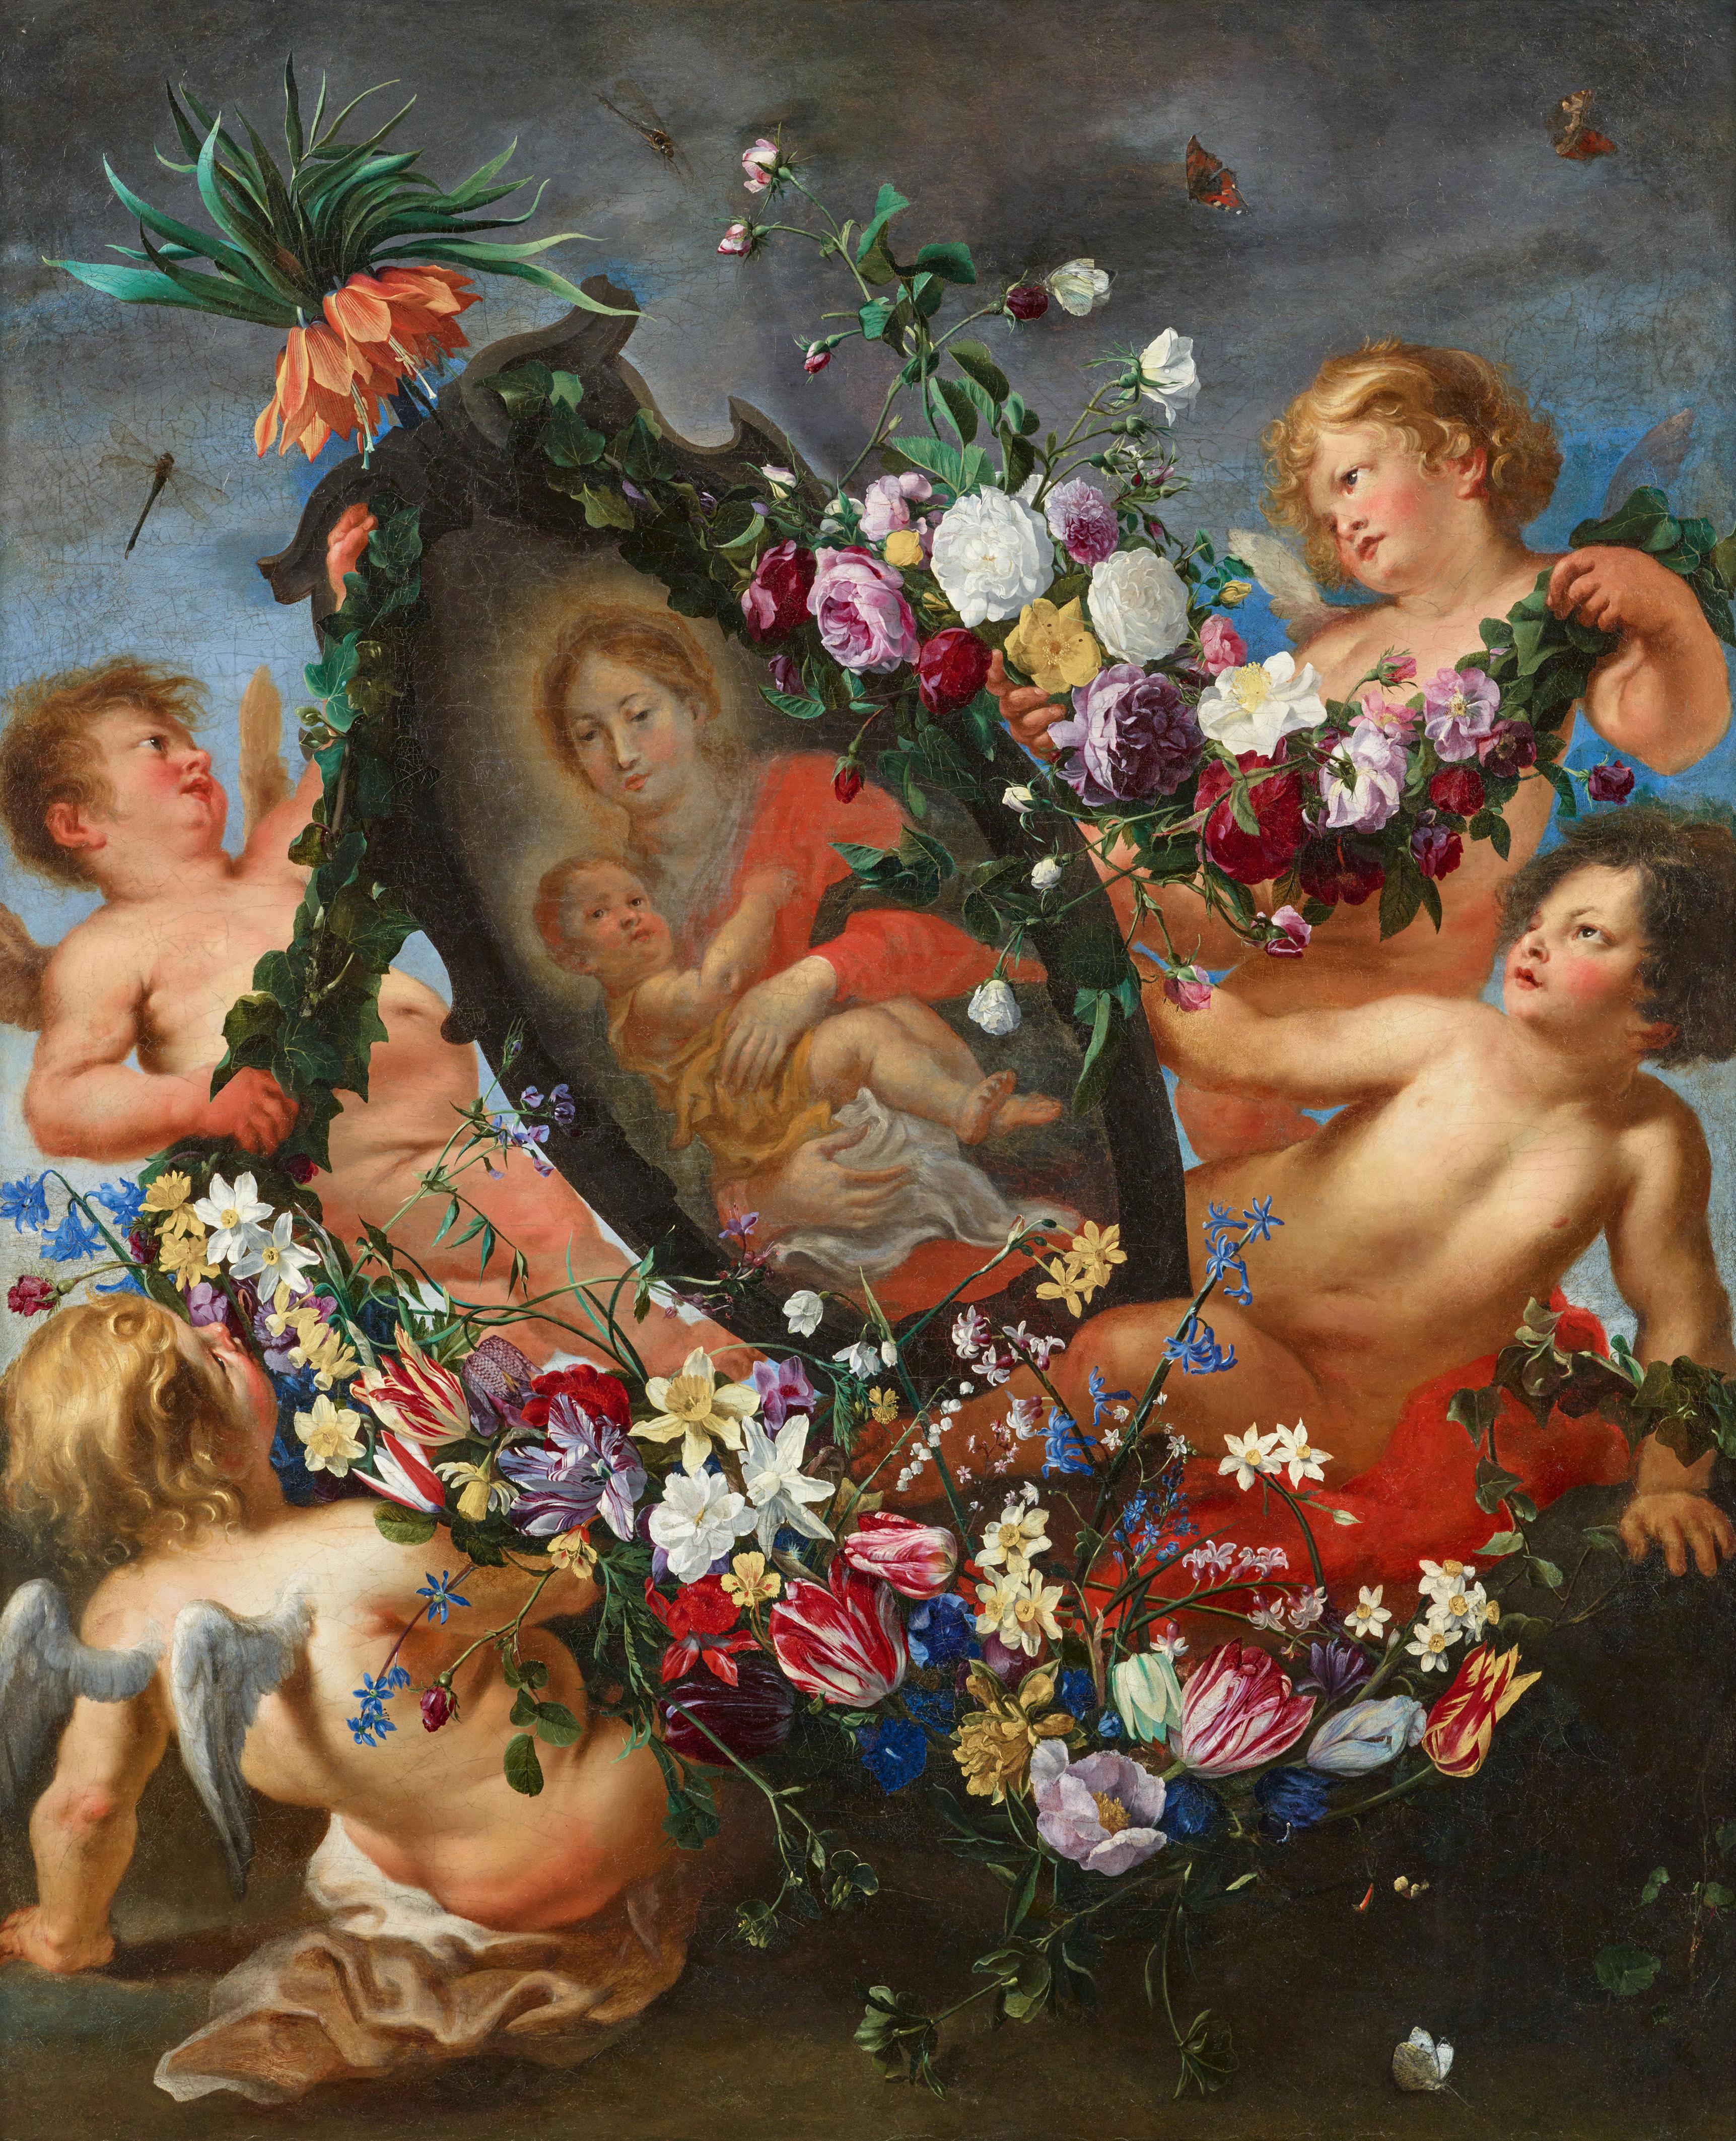 Daniel Seghers
Cornelius Schut - Image of the Virgin and Child borne aloft by Cherubim and Adorned with Garlands - image-1